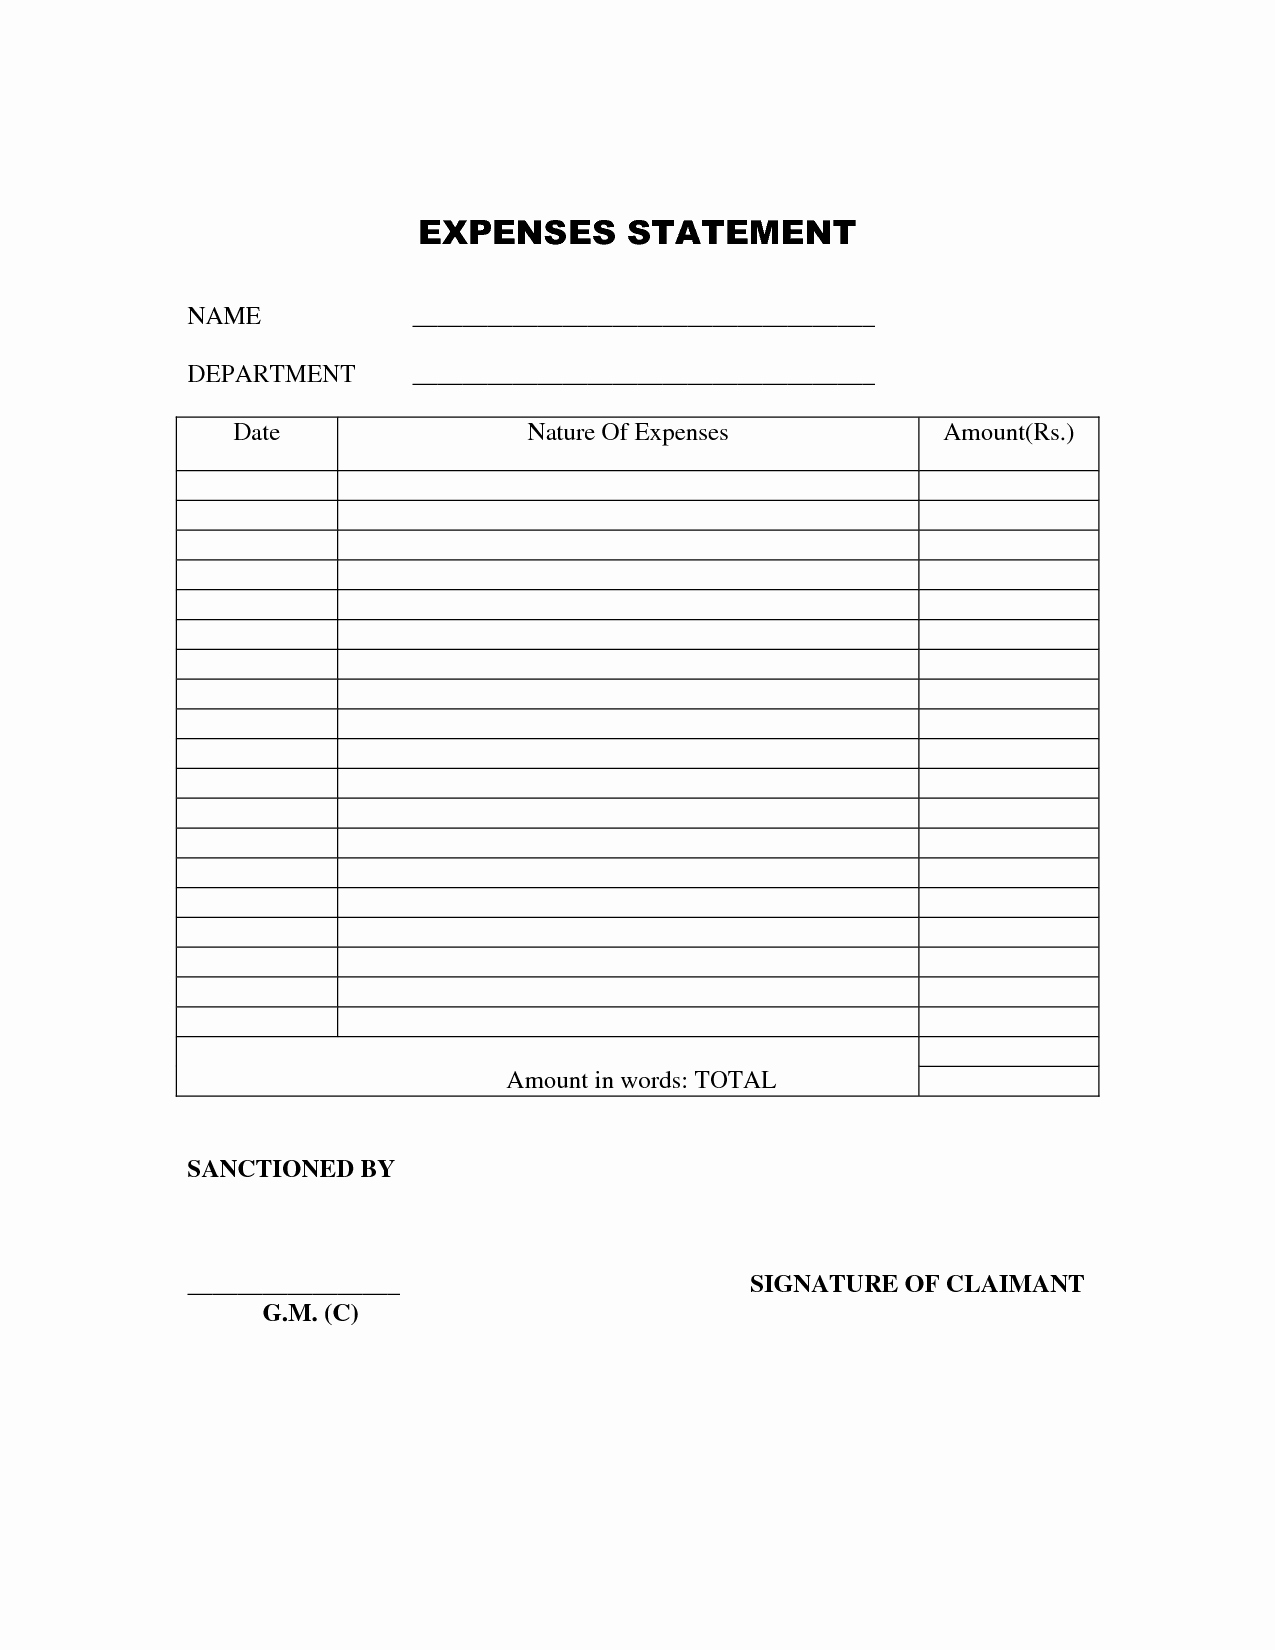 Basic Expense Report Template Fresh Basic Expense Report Template Portablegasgrillweber